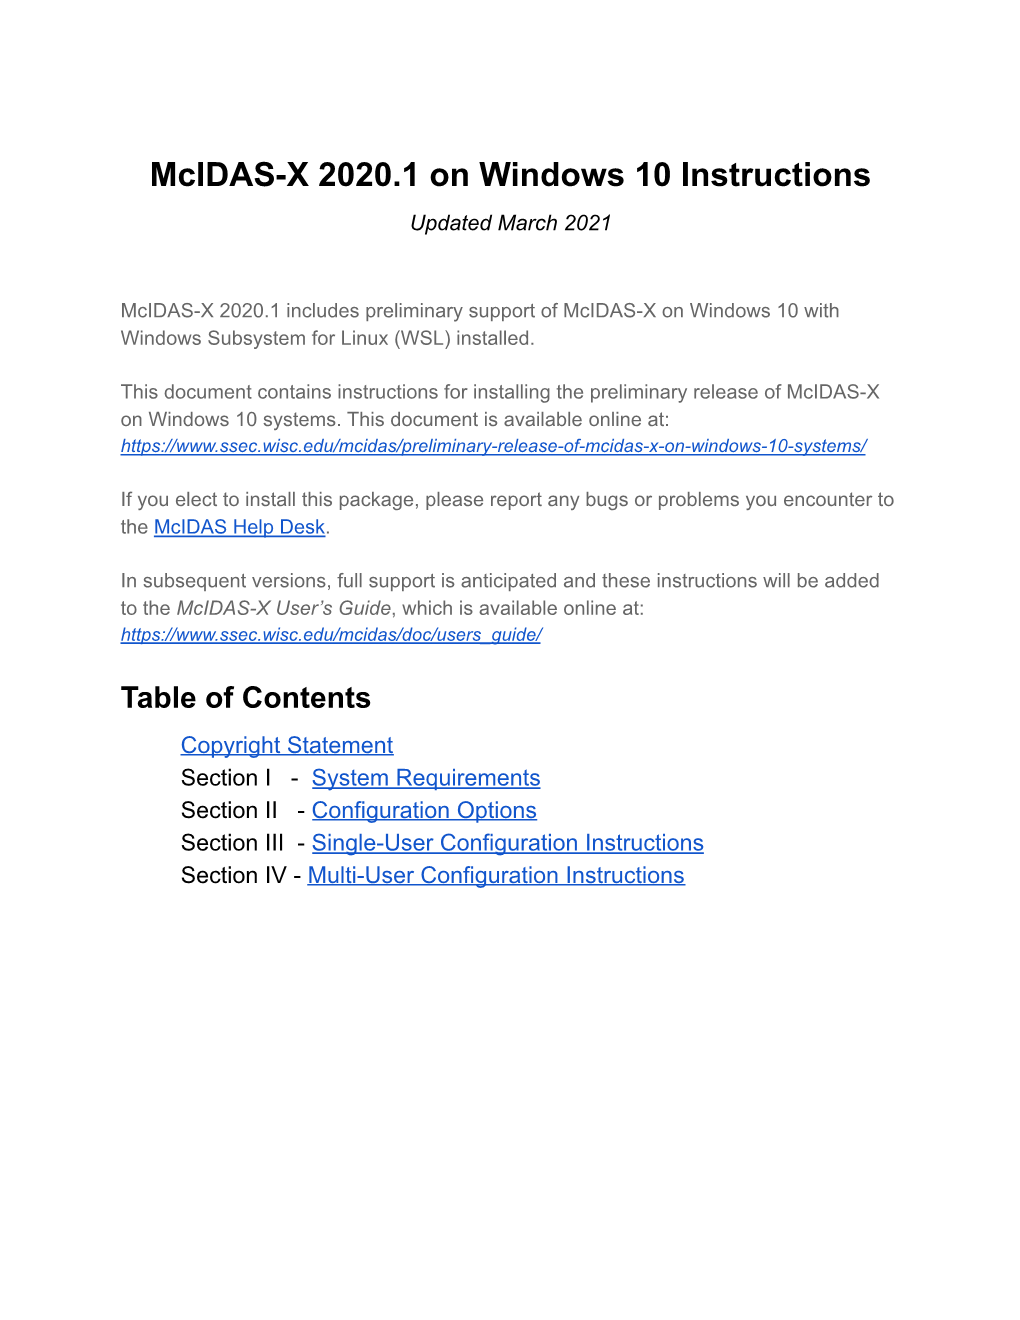 Mcidas-X 2020.1 on Windows 10 Installation Instructions